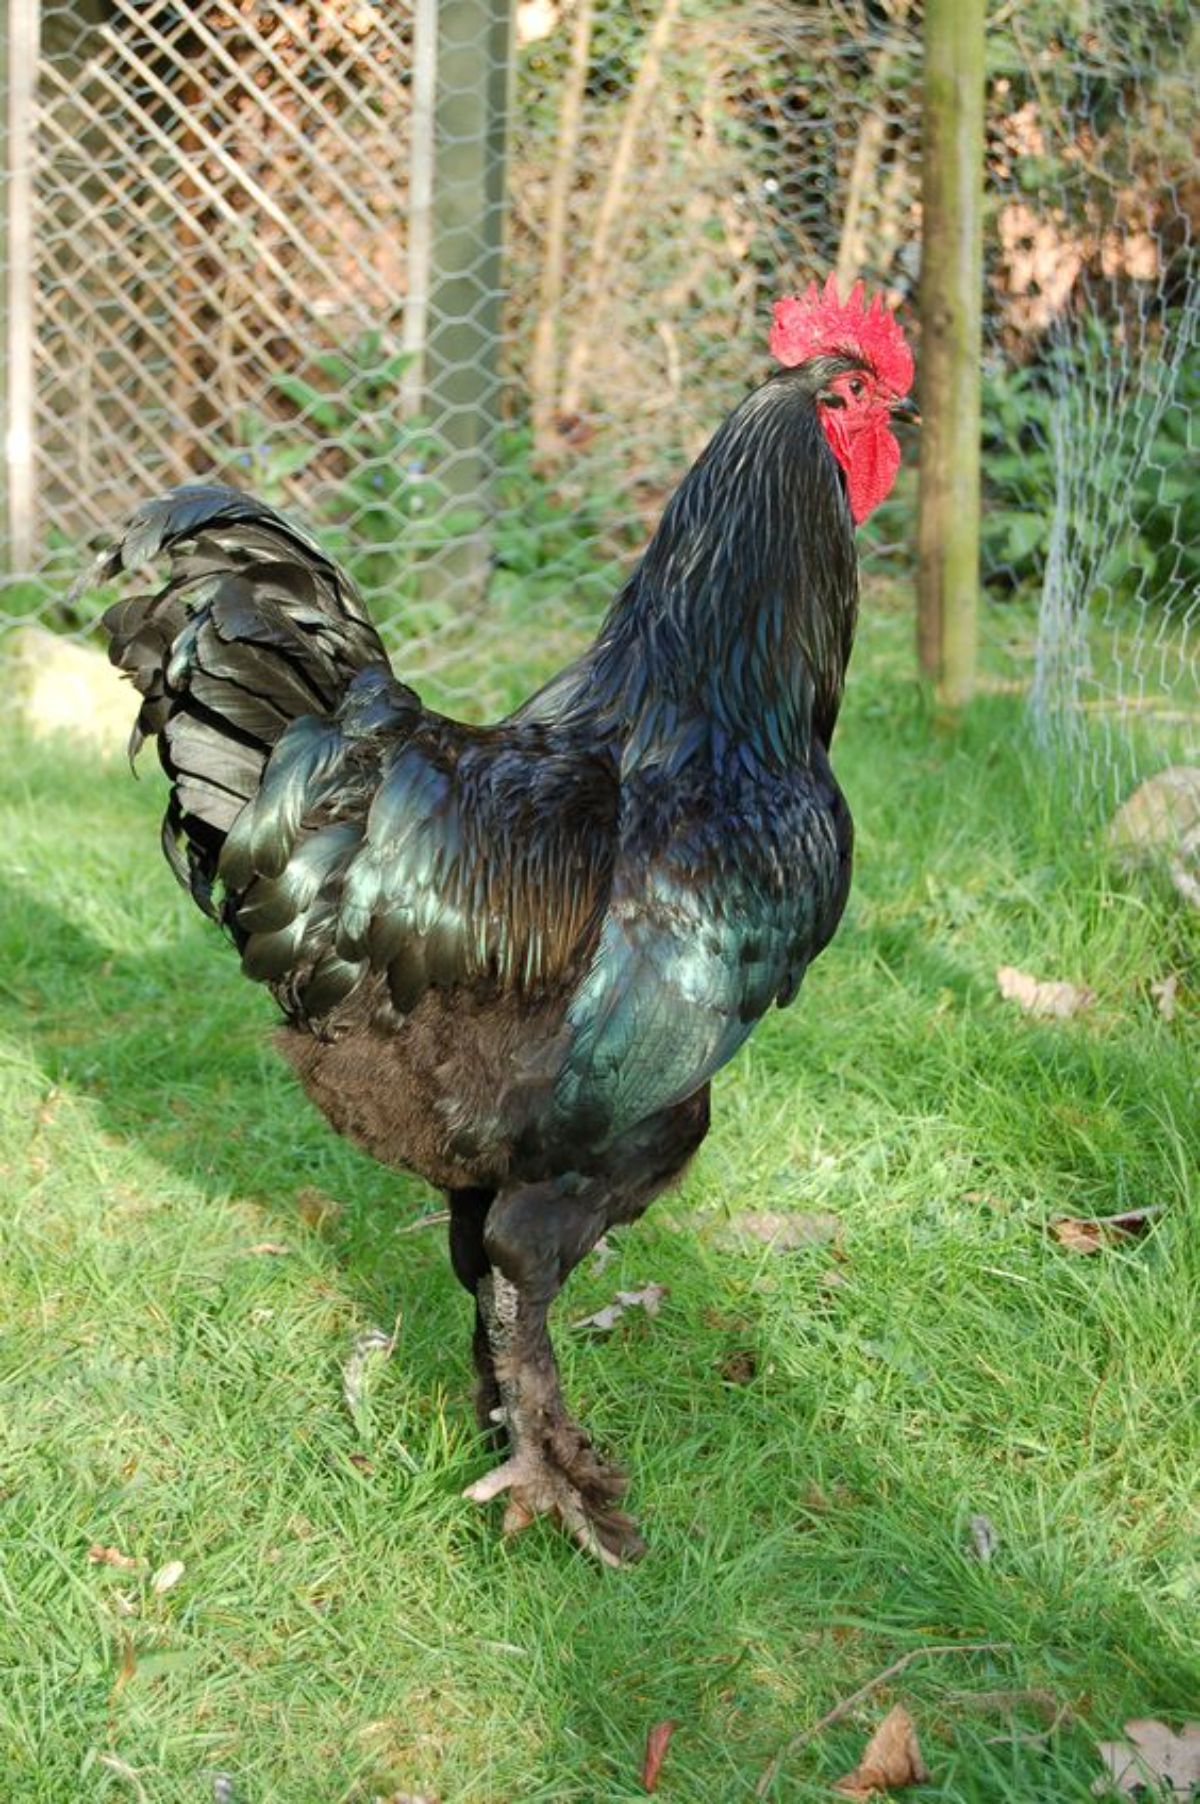 A big, tall, Modern Langshan rooster in a backyard.